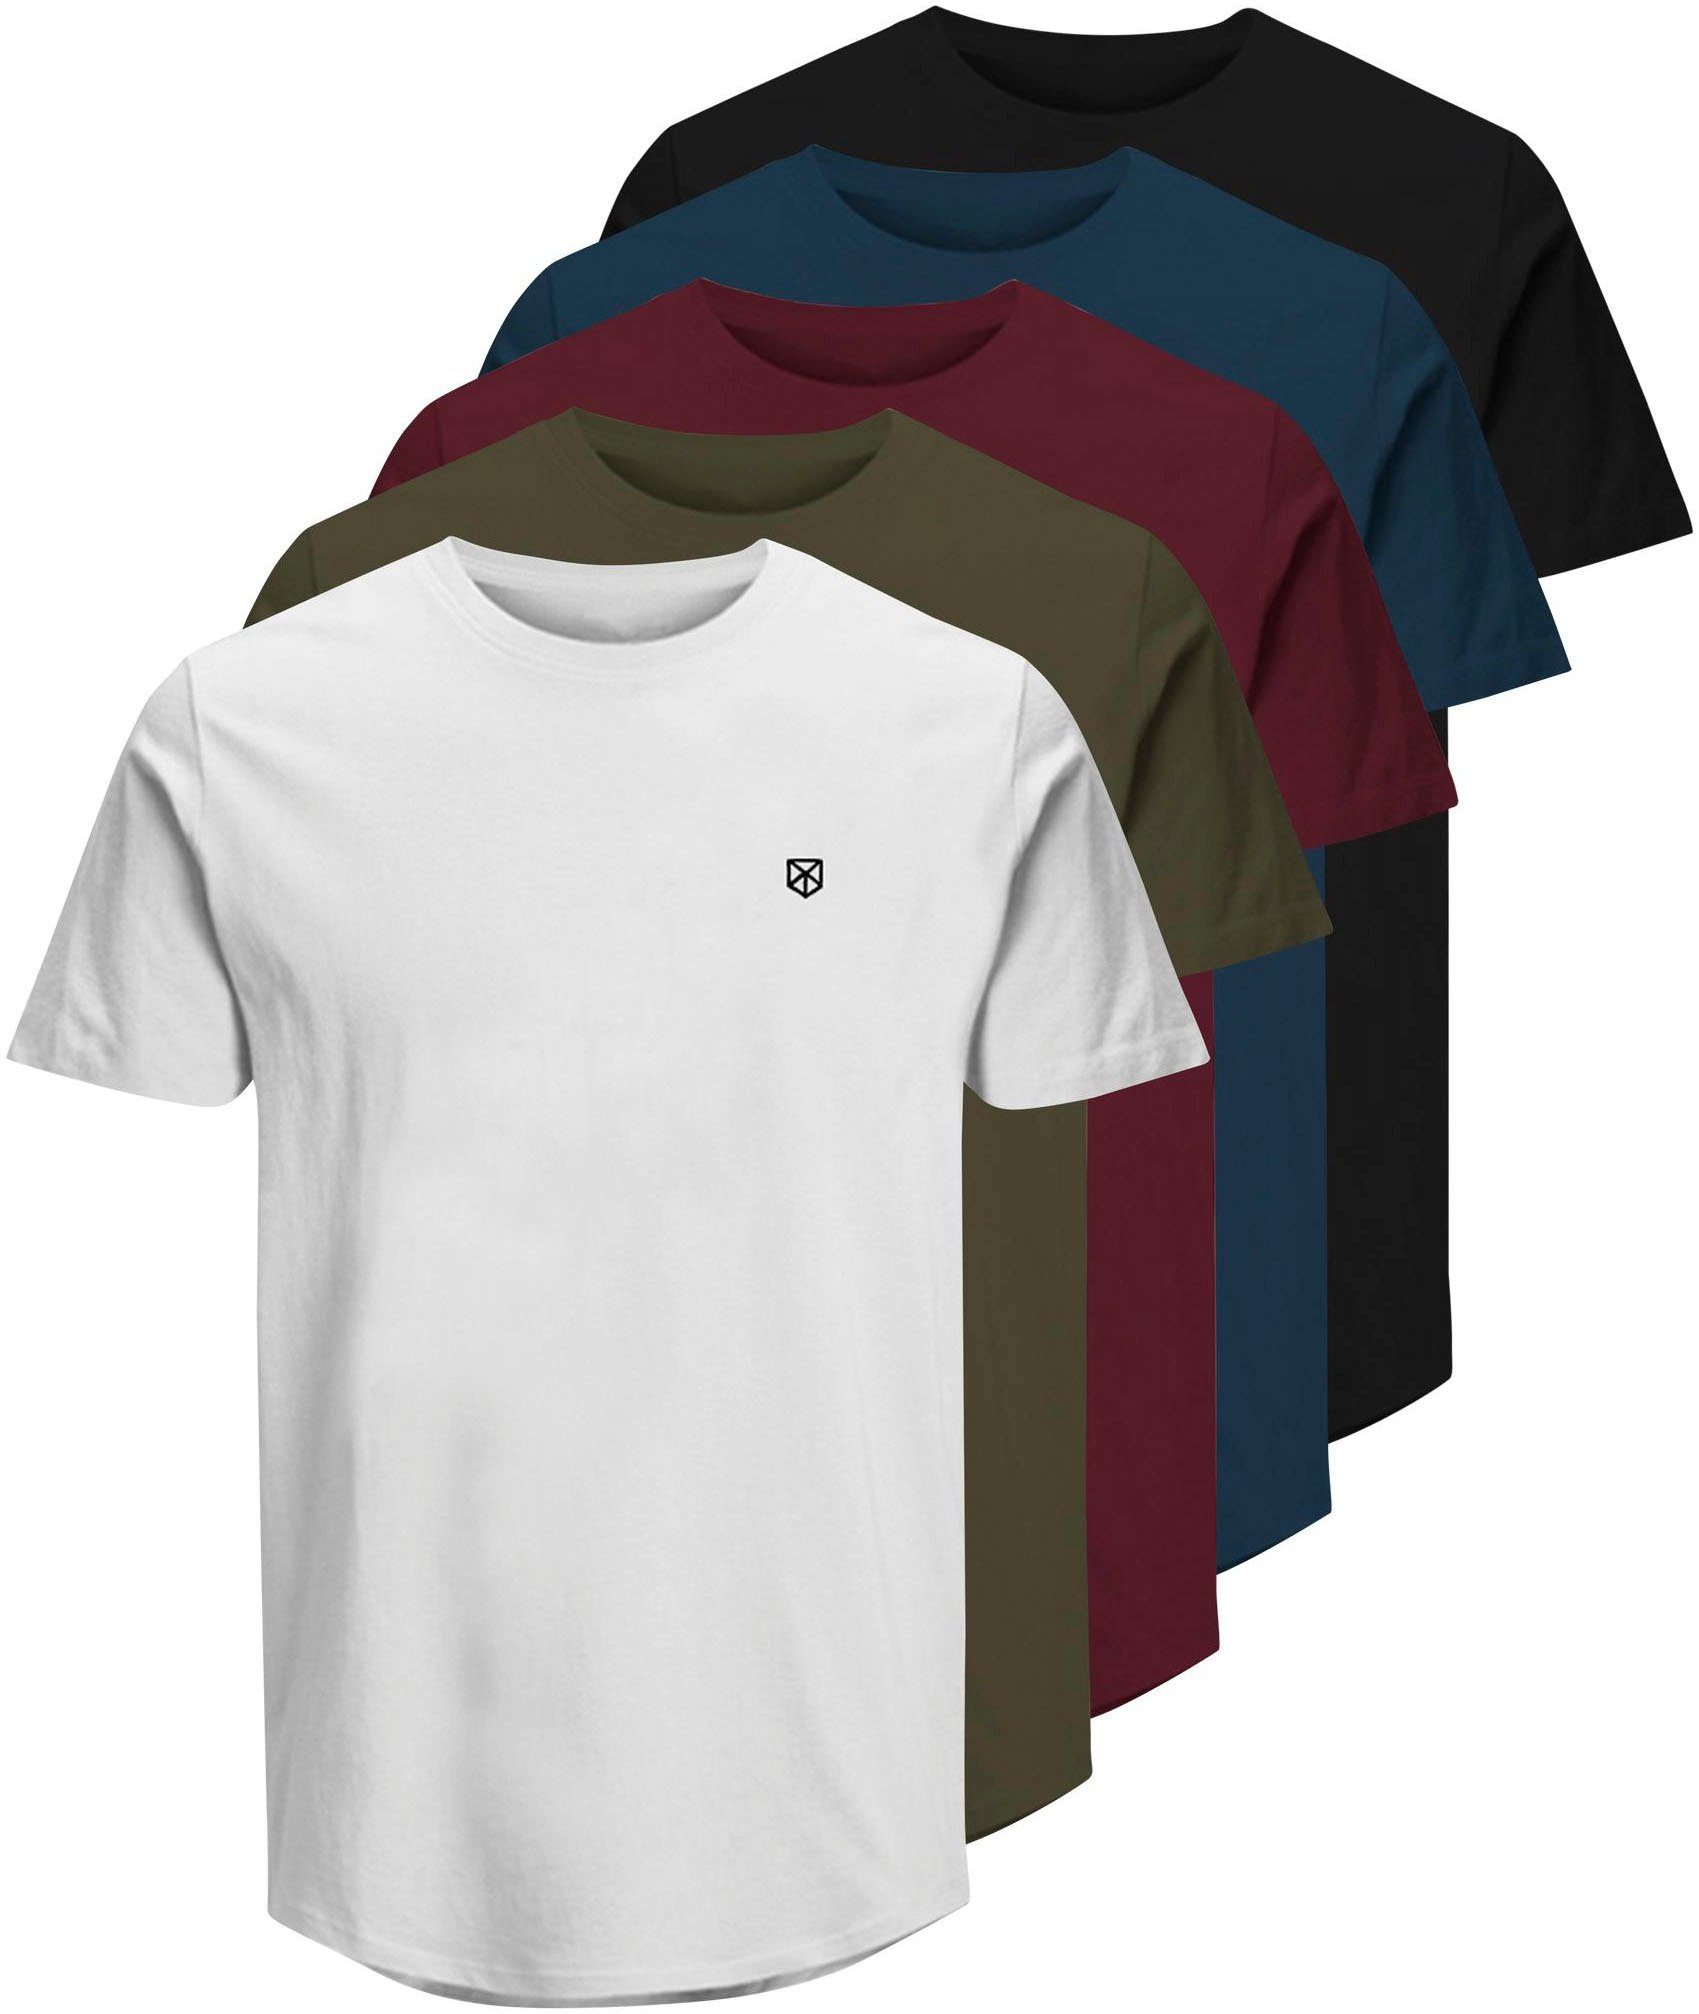 Jack & Jones Herren T-Shirts online kaufen | OTTO